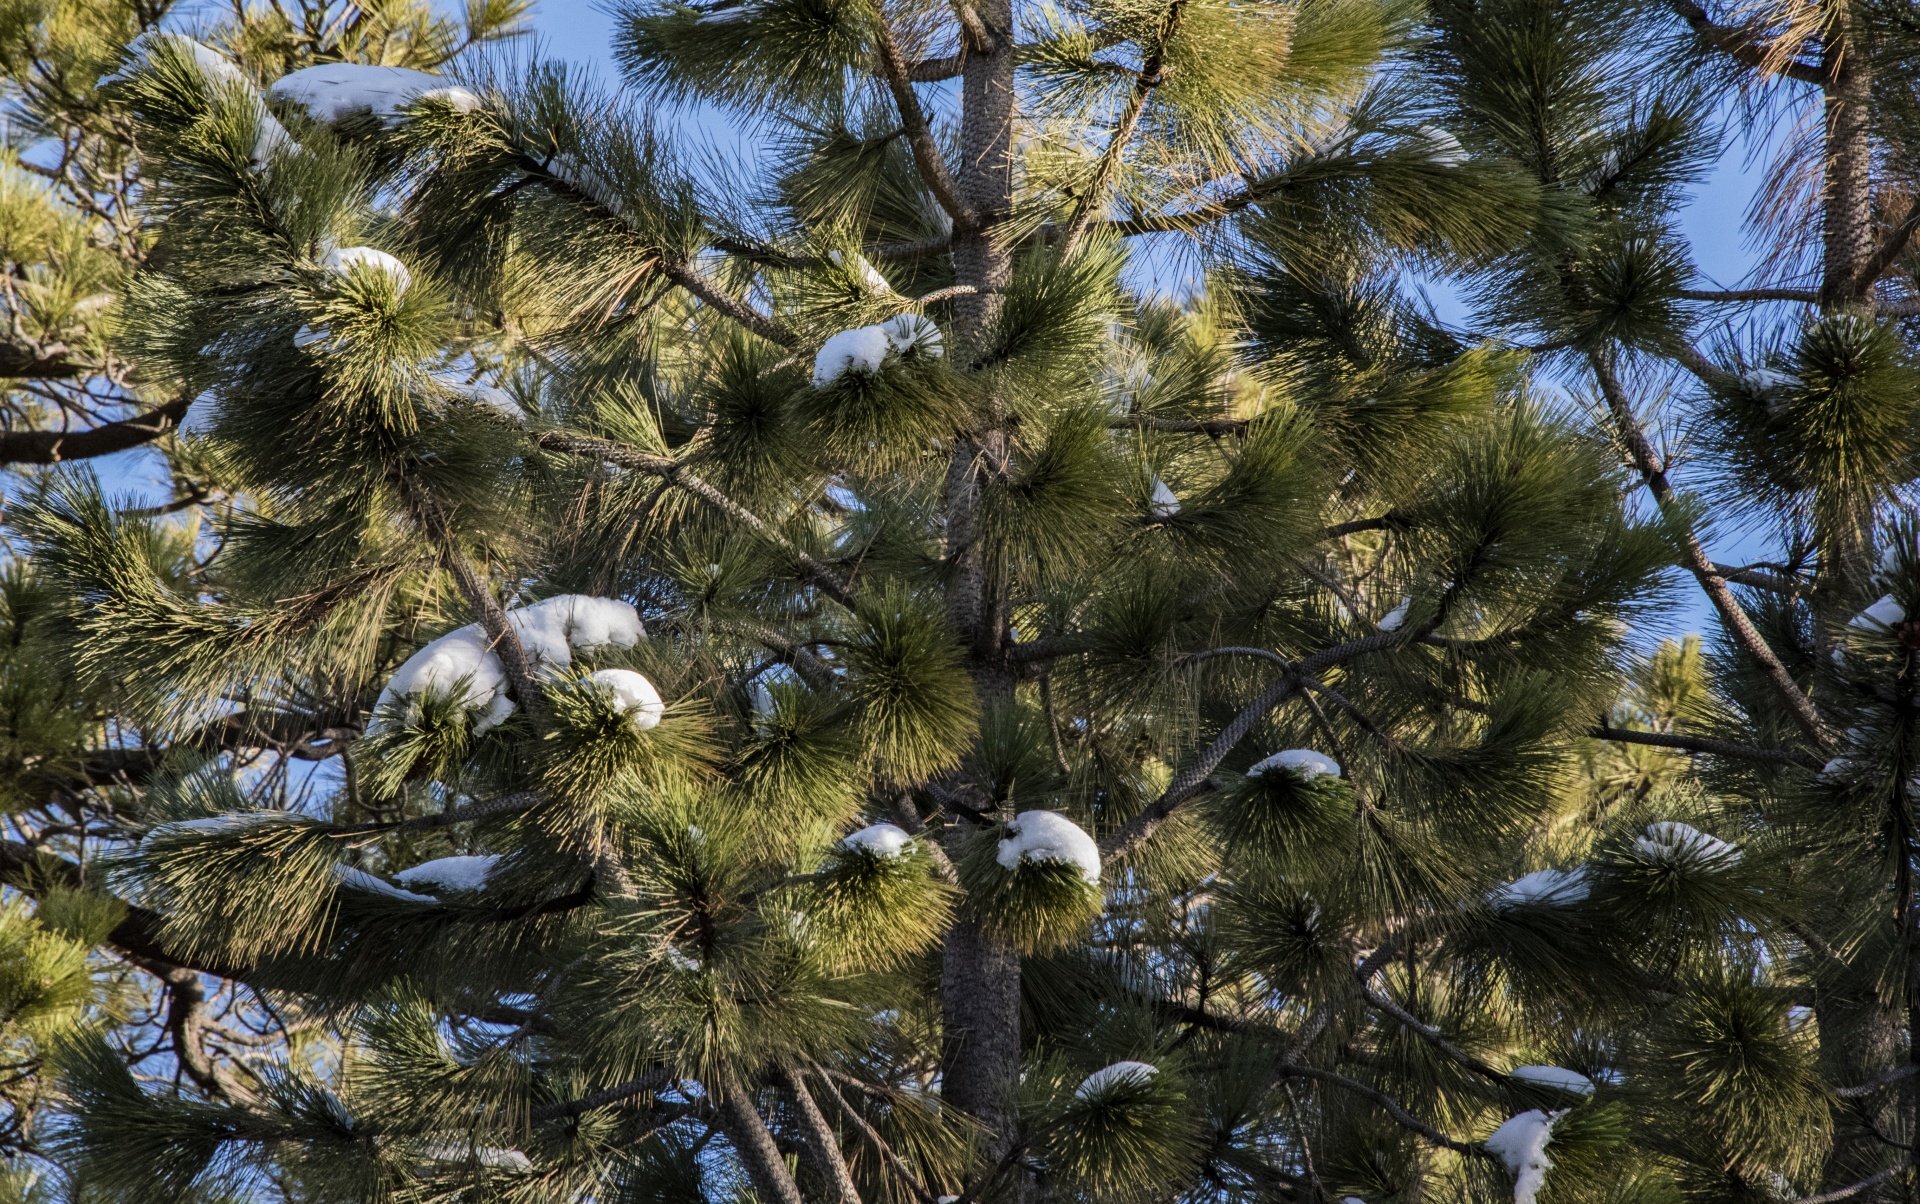 Snow Drifts On Pine Trees